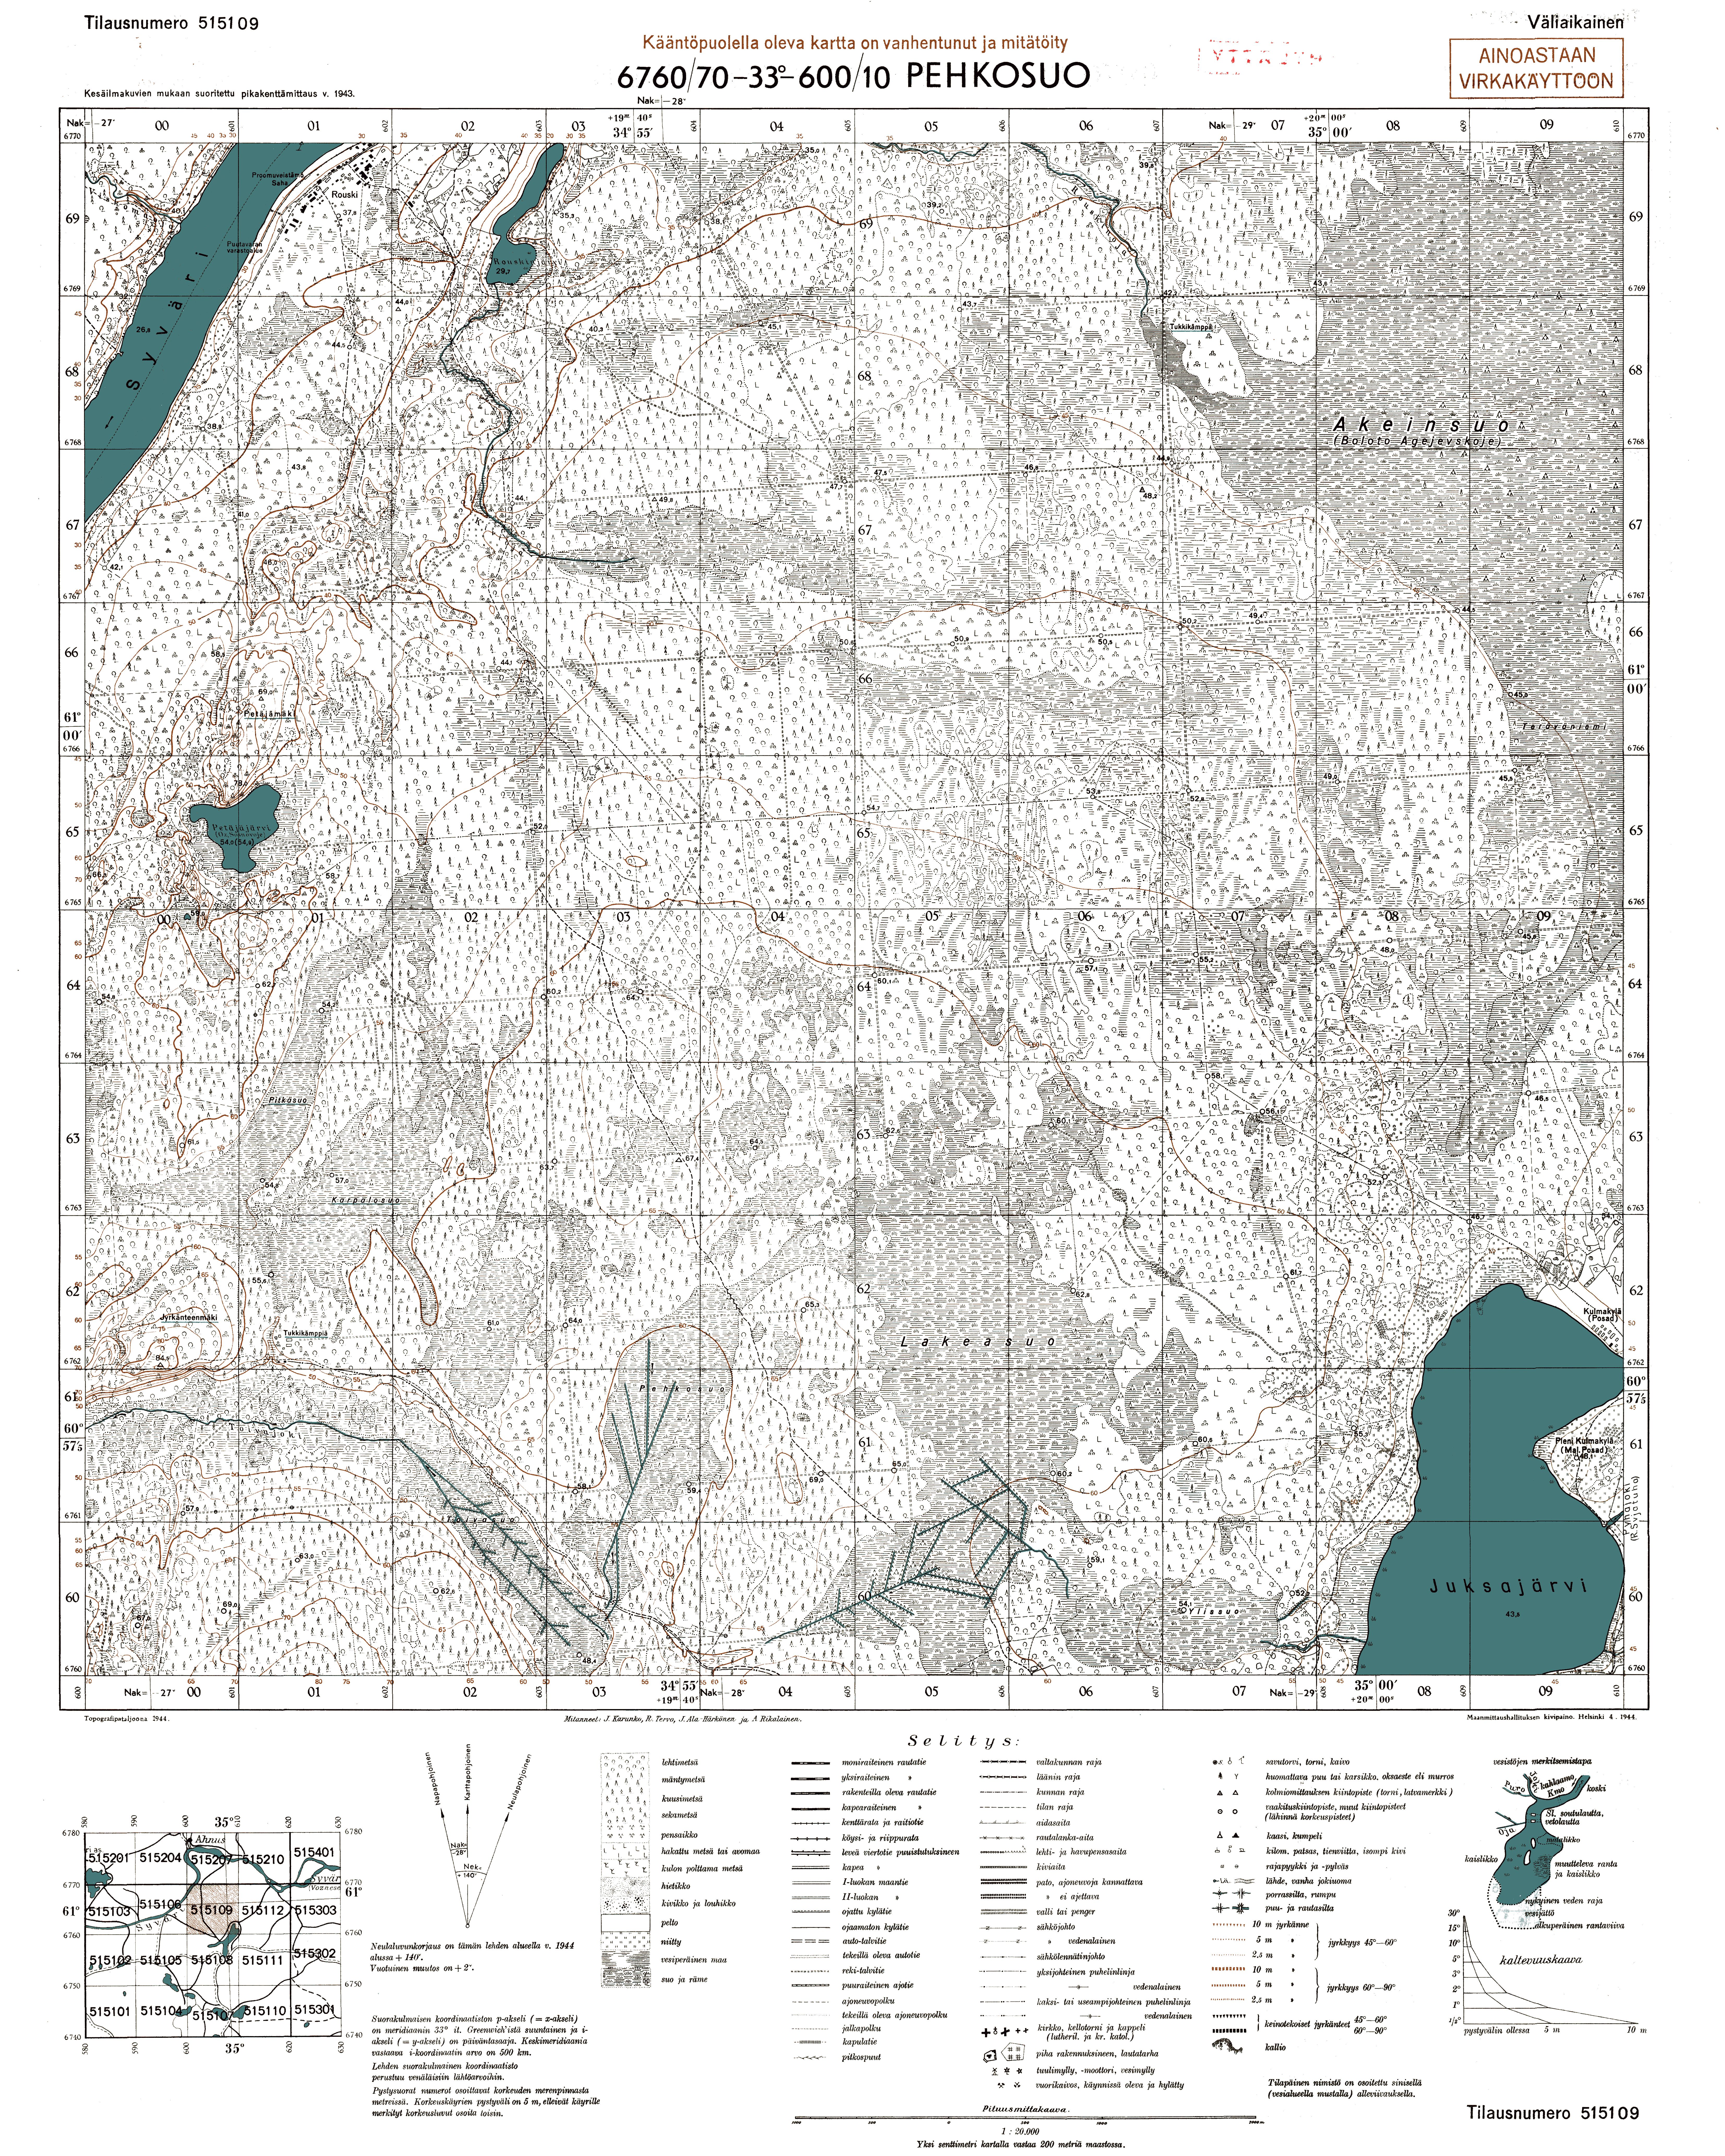 Pehkboloto Marshes. Pehkosuo. Topografikartta 515109. Topographic map from 1944